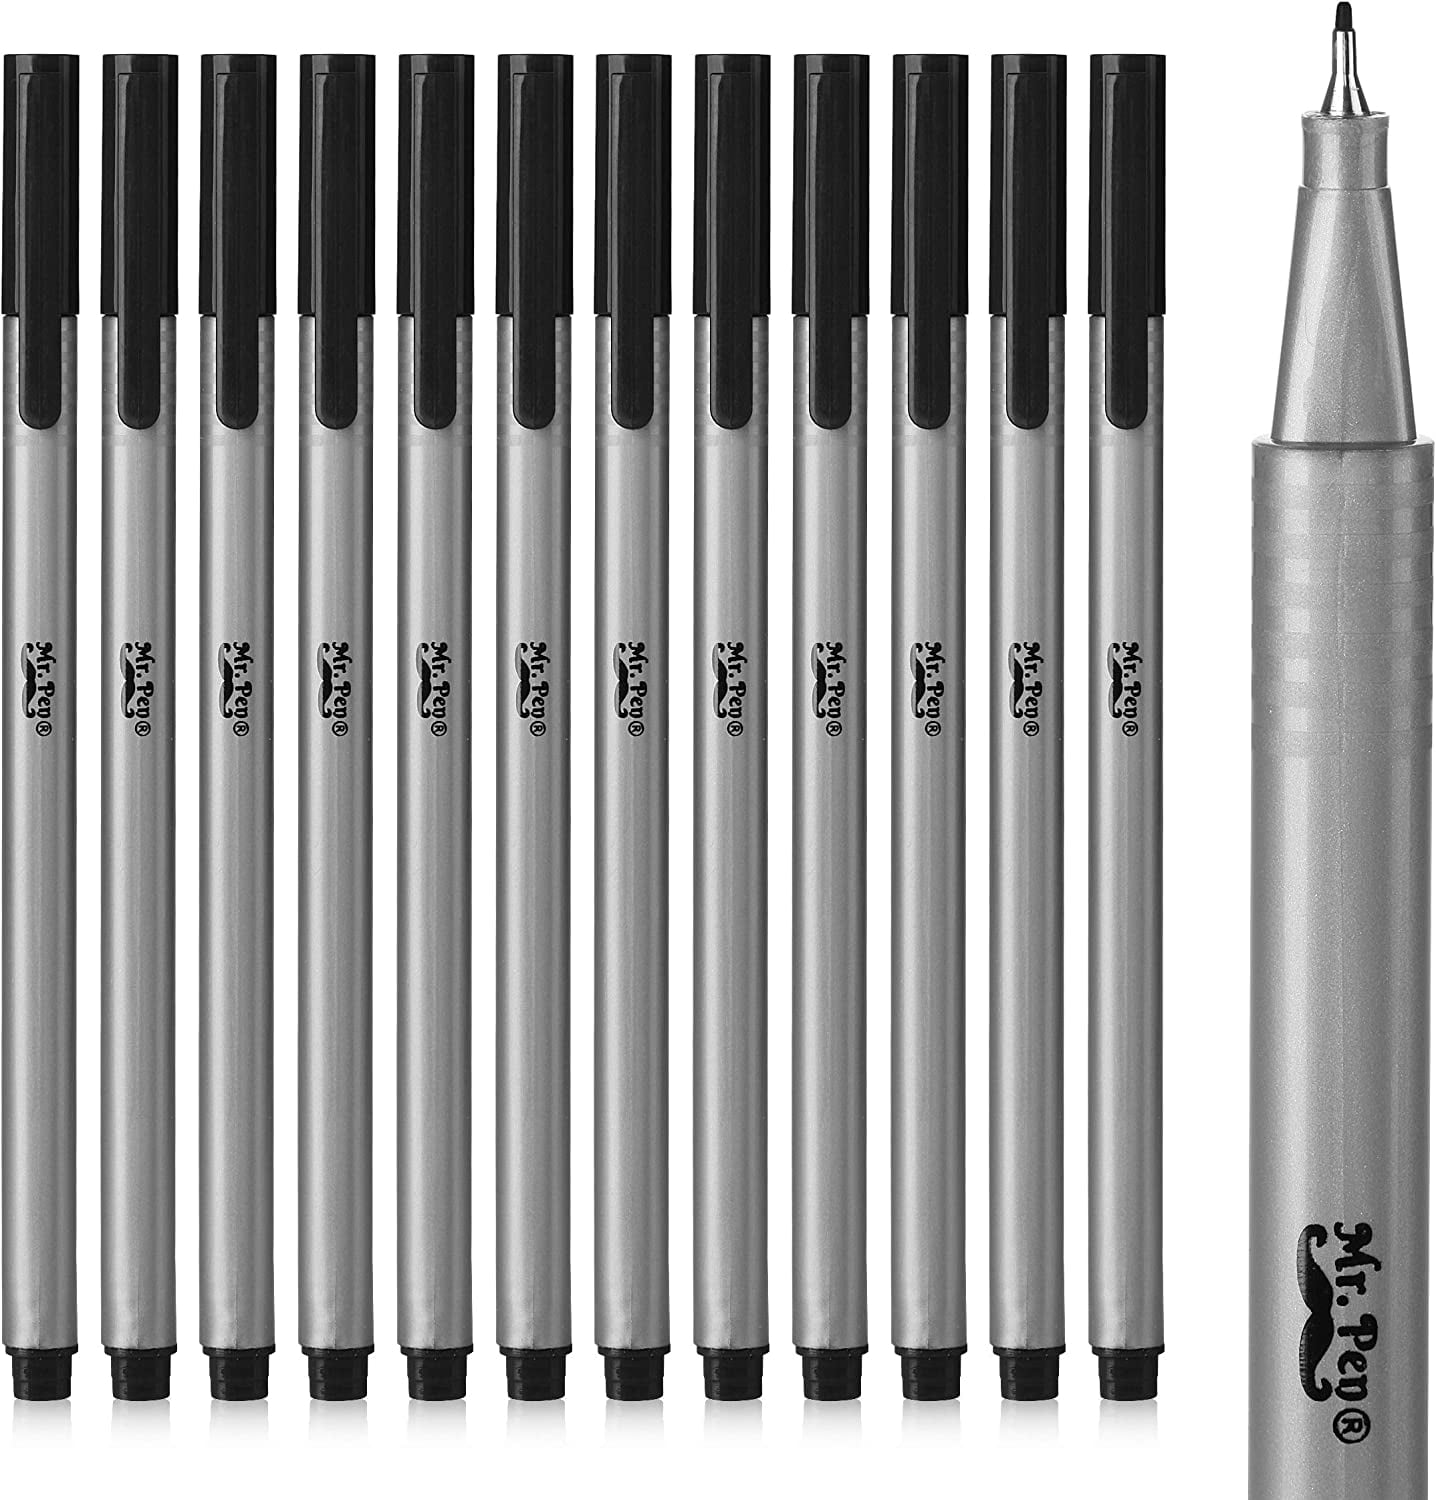 Mr. Pen- Pens, Felt Tip Pens, Black Pens, Pack of 6, Fast Dry, No Smear,  Fine Point Pens Black, Black Felt Tip Pens, Bible Journaling Pens, Felt  Pens, Planner Markers, Pens for